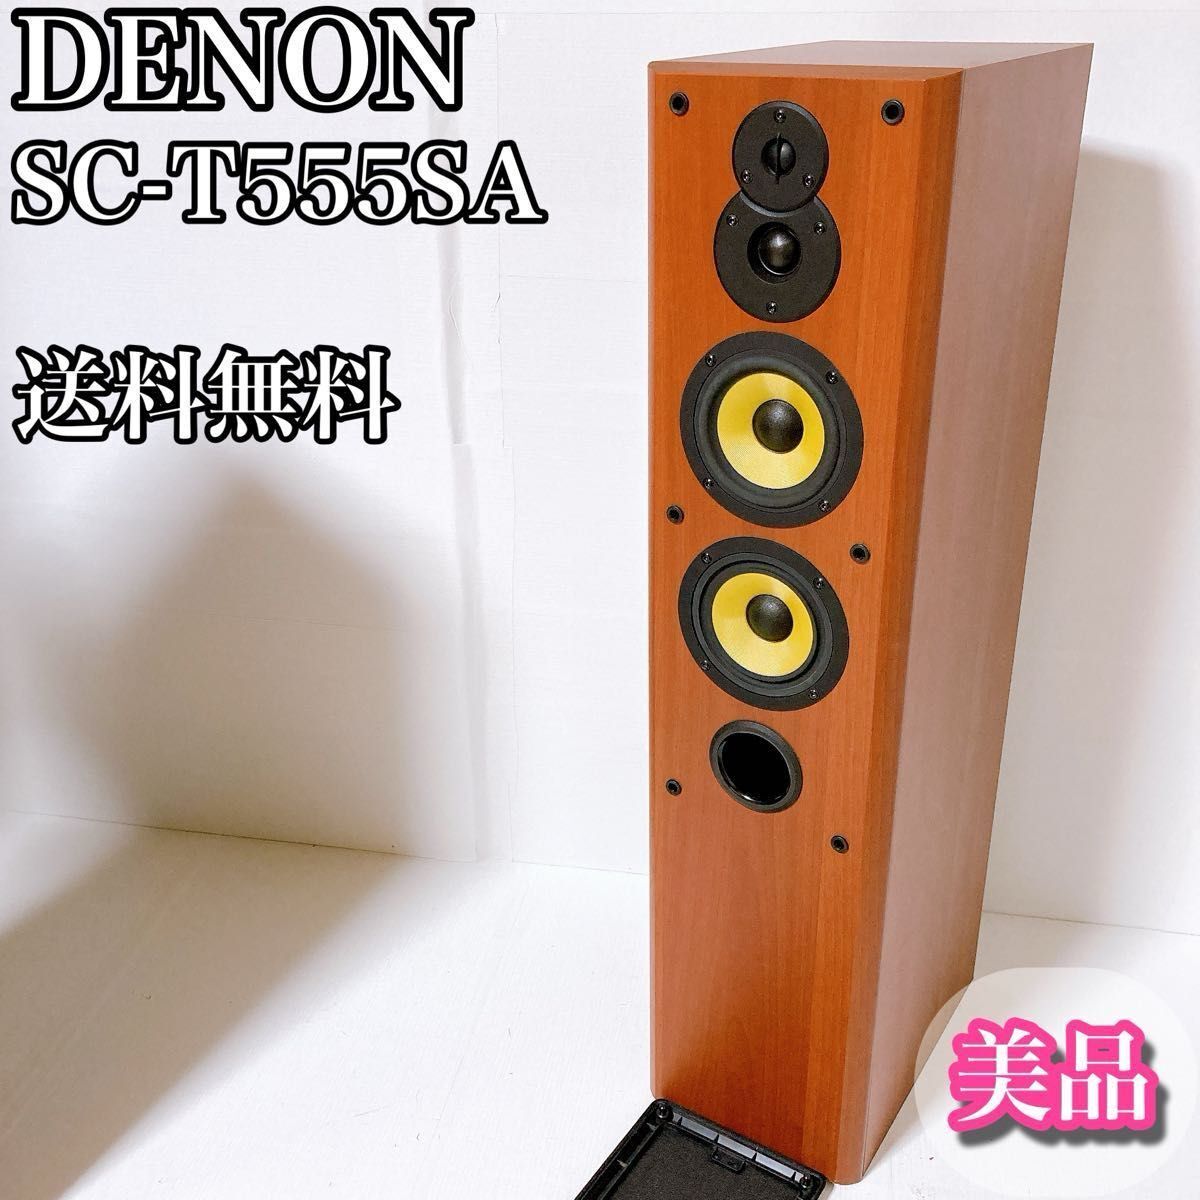 DENON Denon SC-T555SA динамик tallboy бесплатная доставка ①